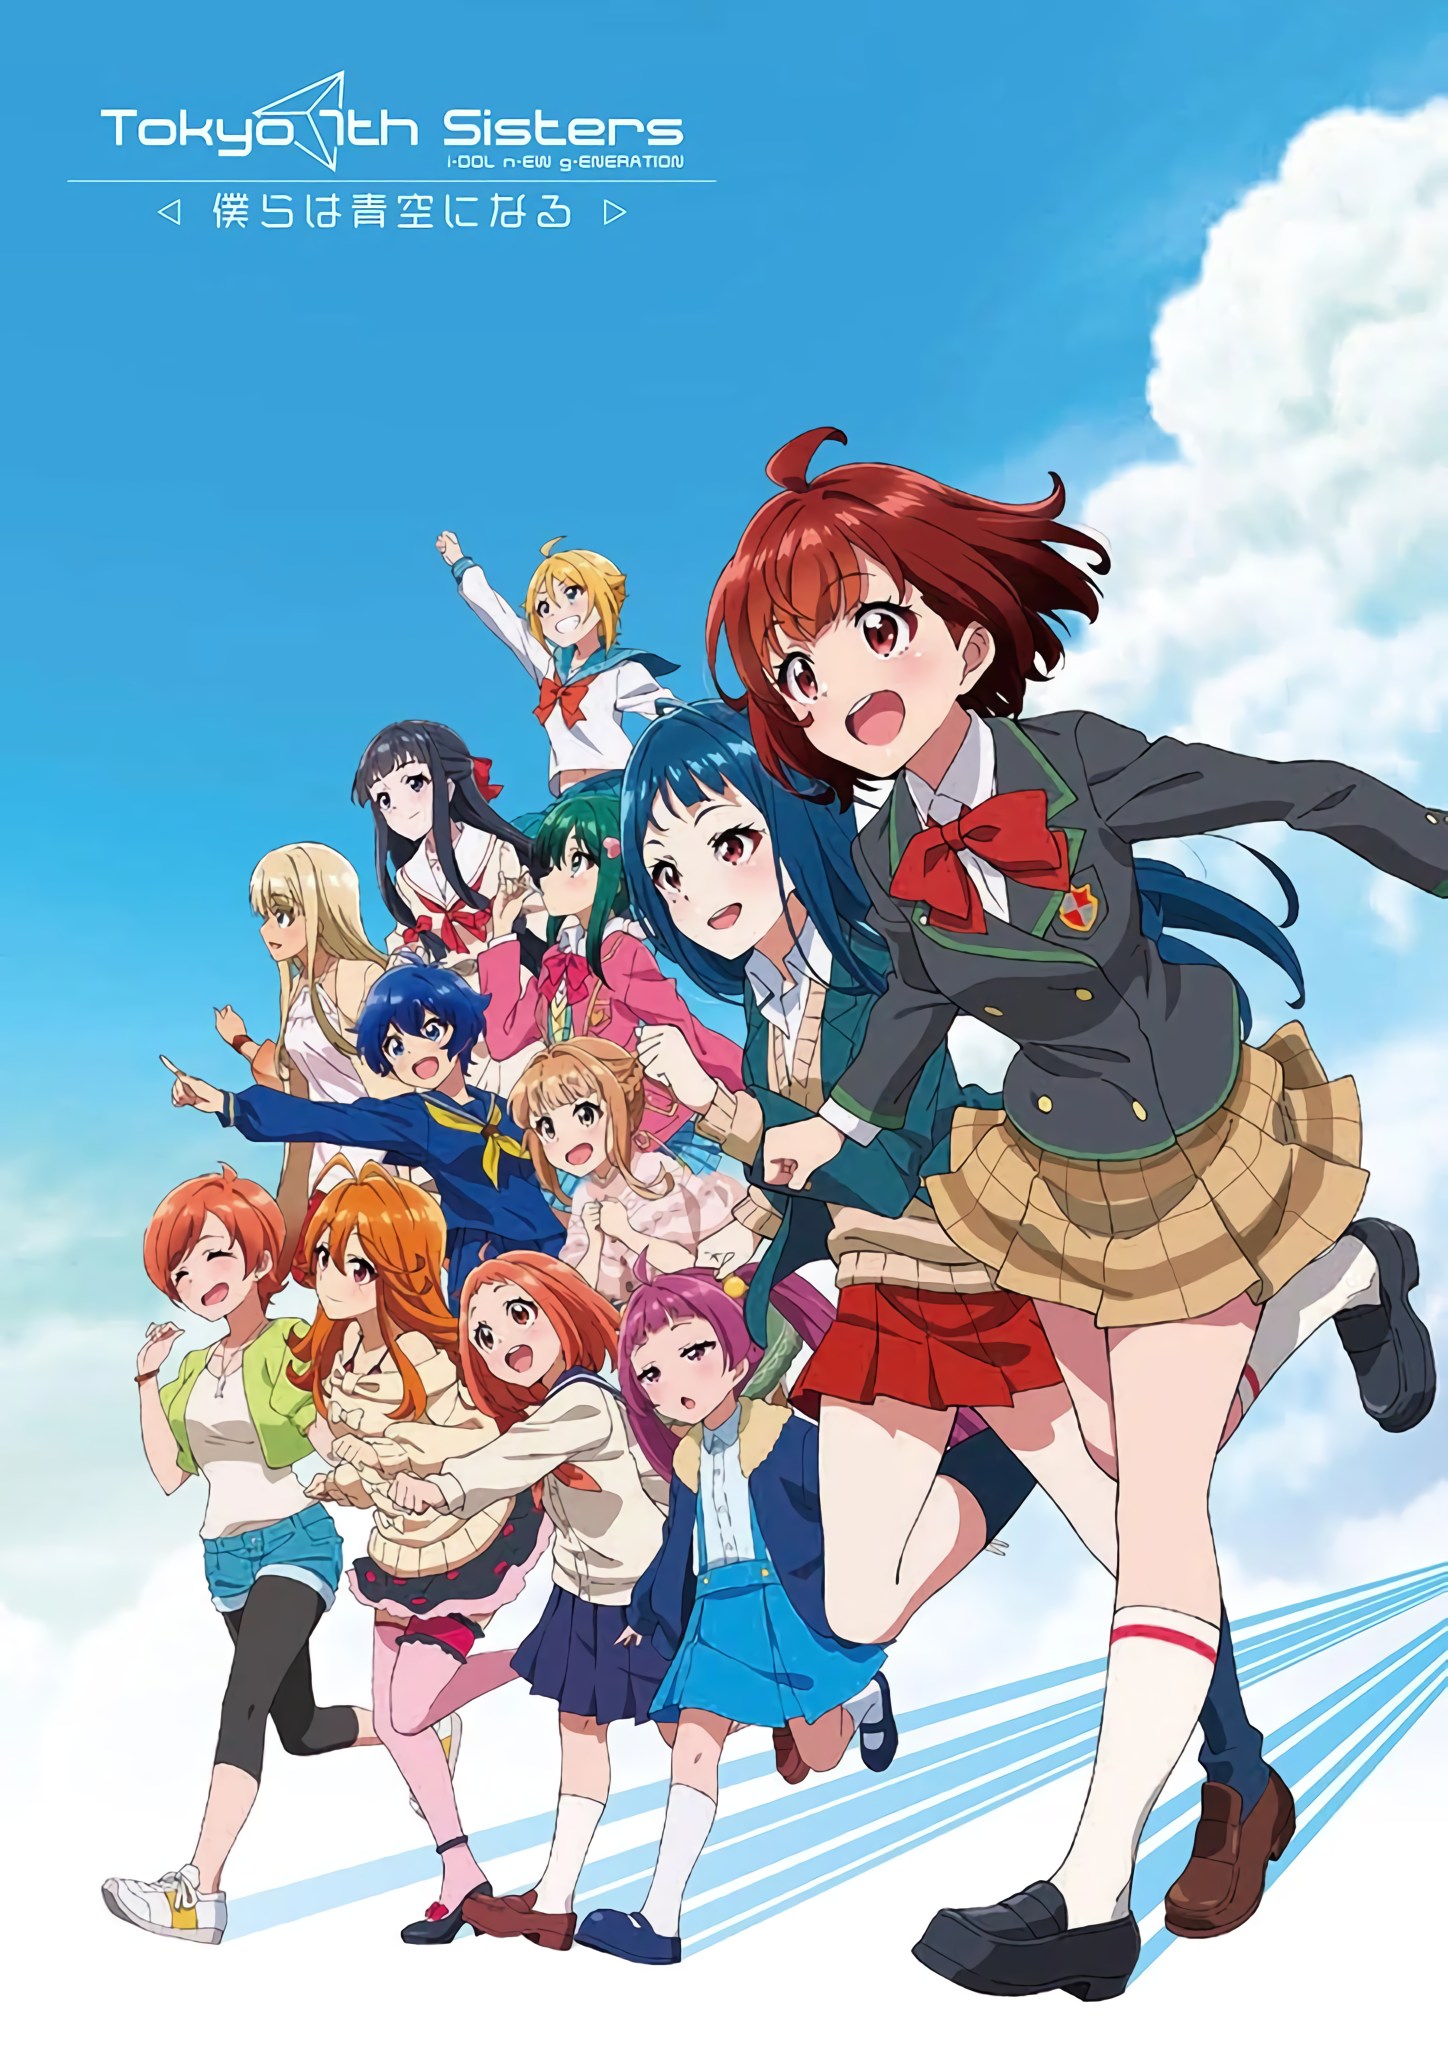 Tokyo 7th Sisters: Bokura wa Aozora ni Naru - recenzja anime - rascal.pl